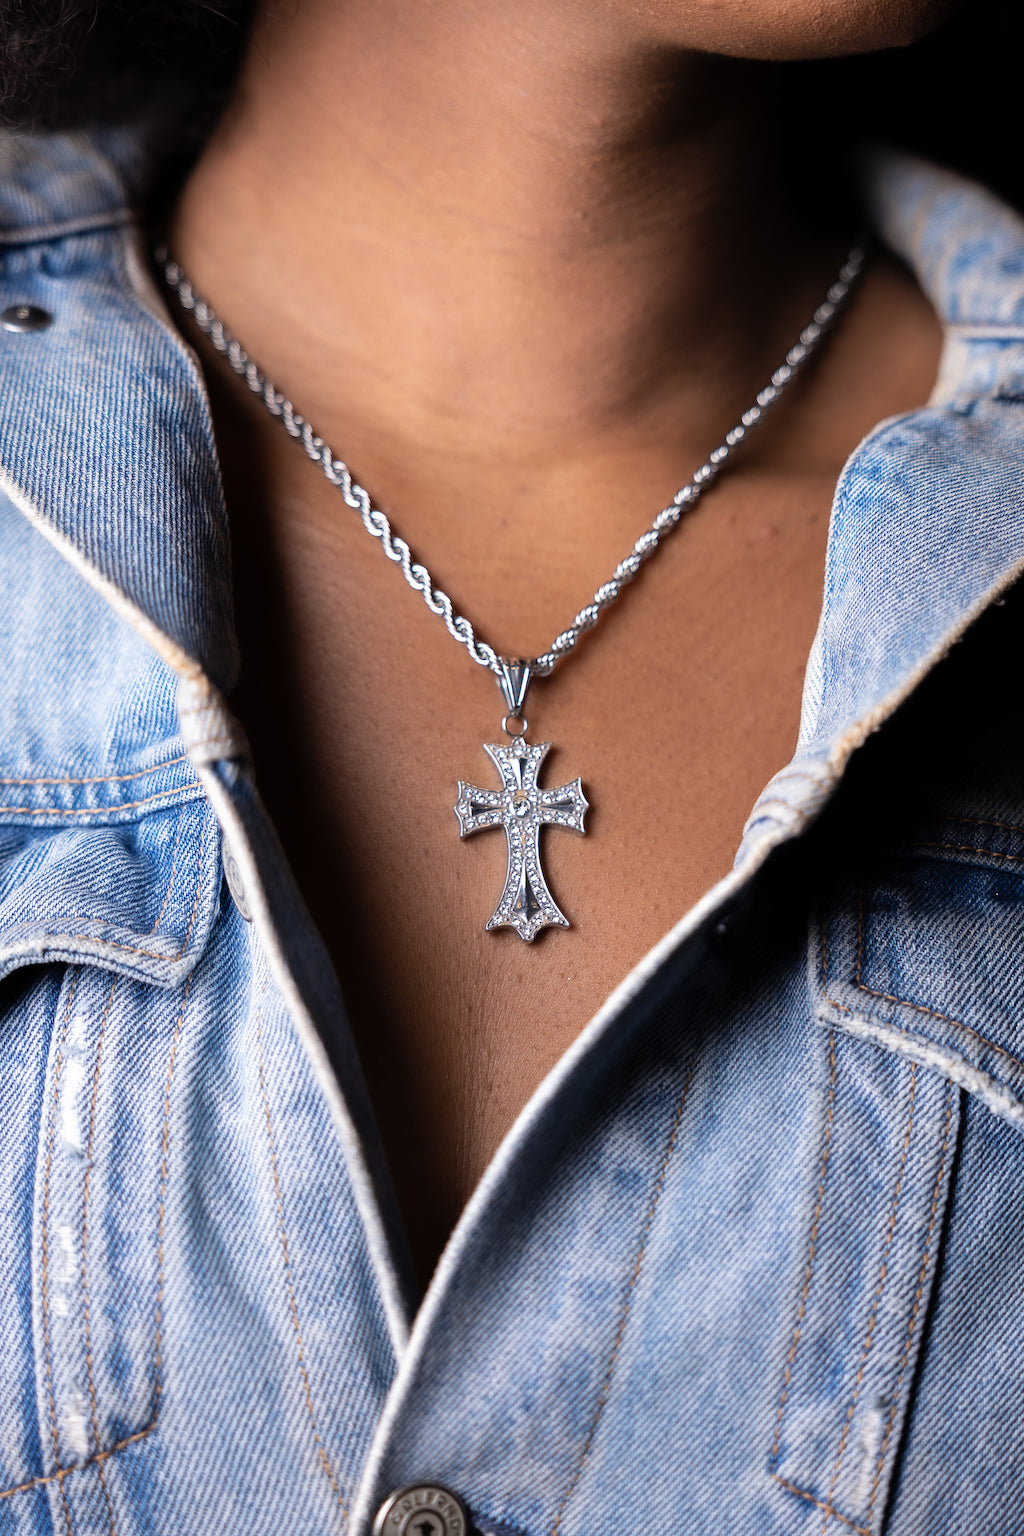 Diamond Large Fleury Cross Necklace